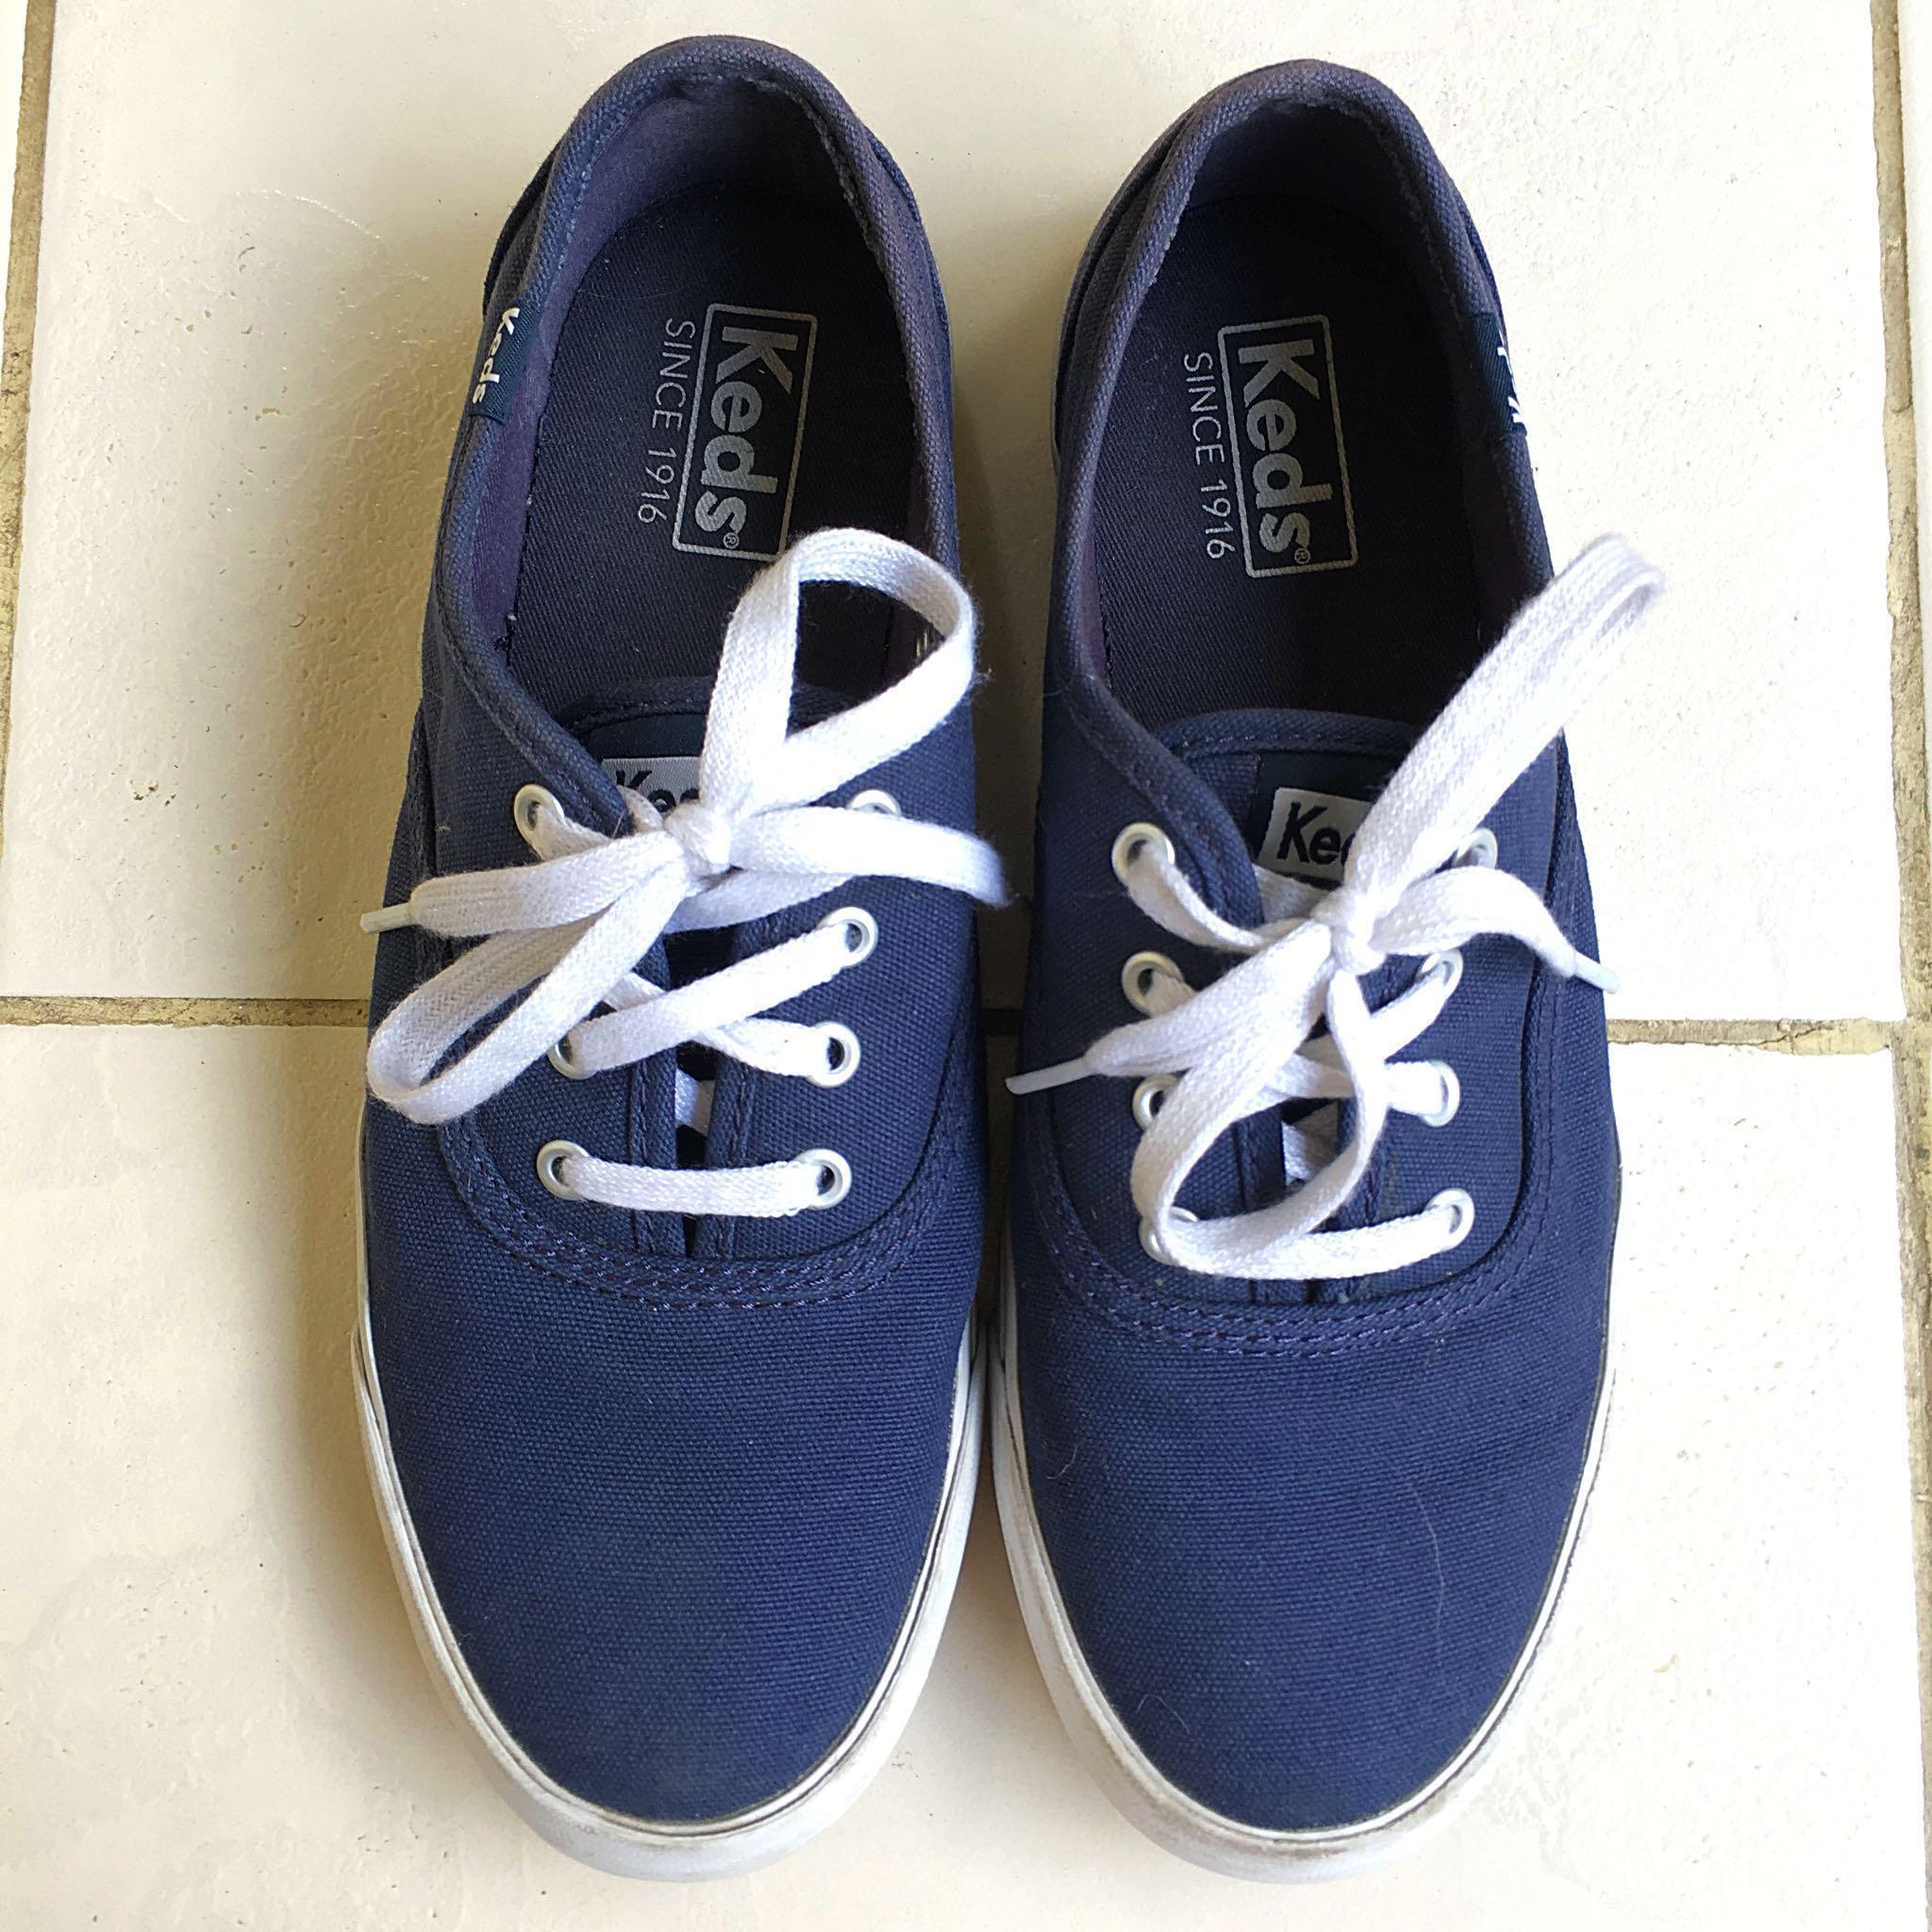 keds blue sneakers